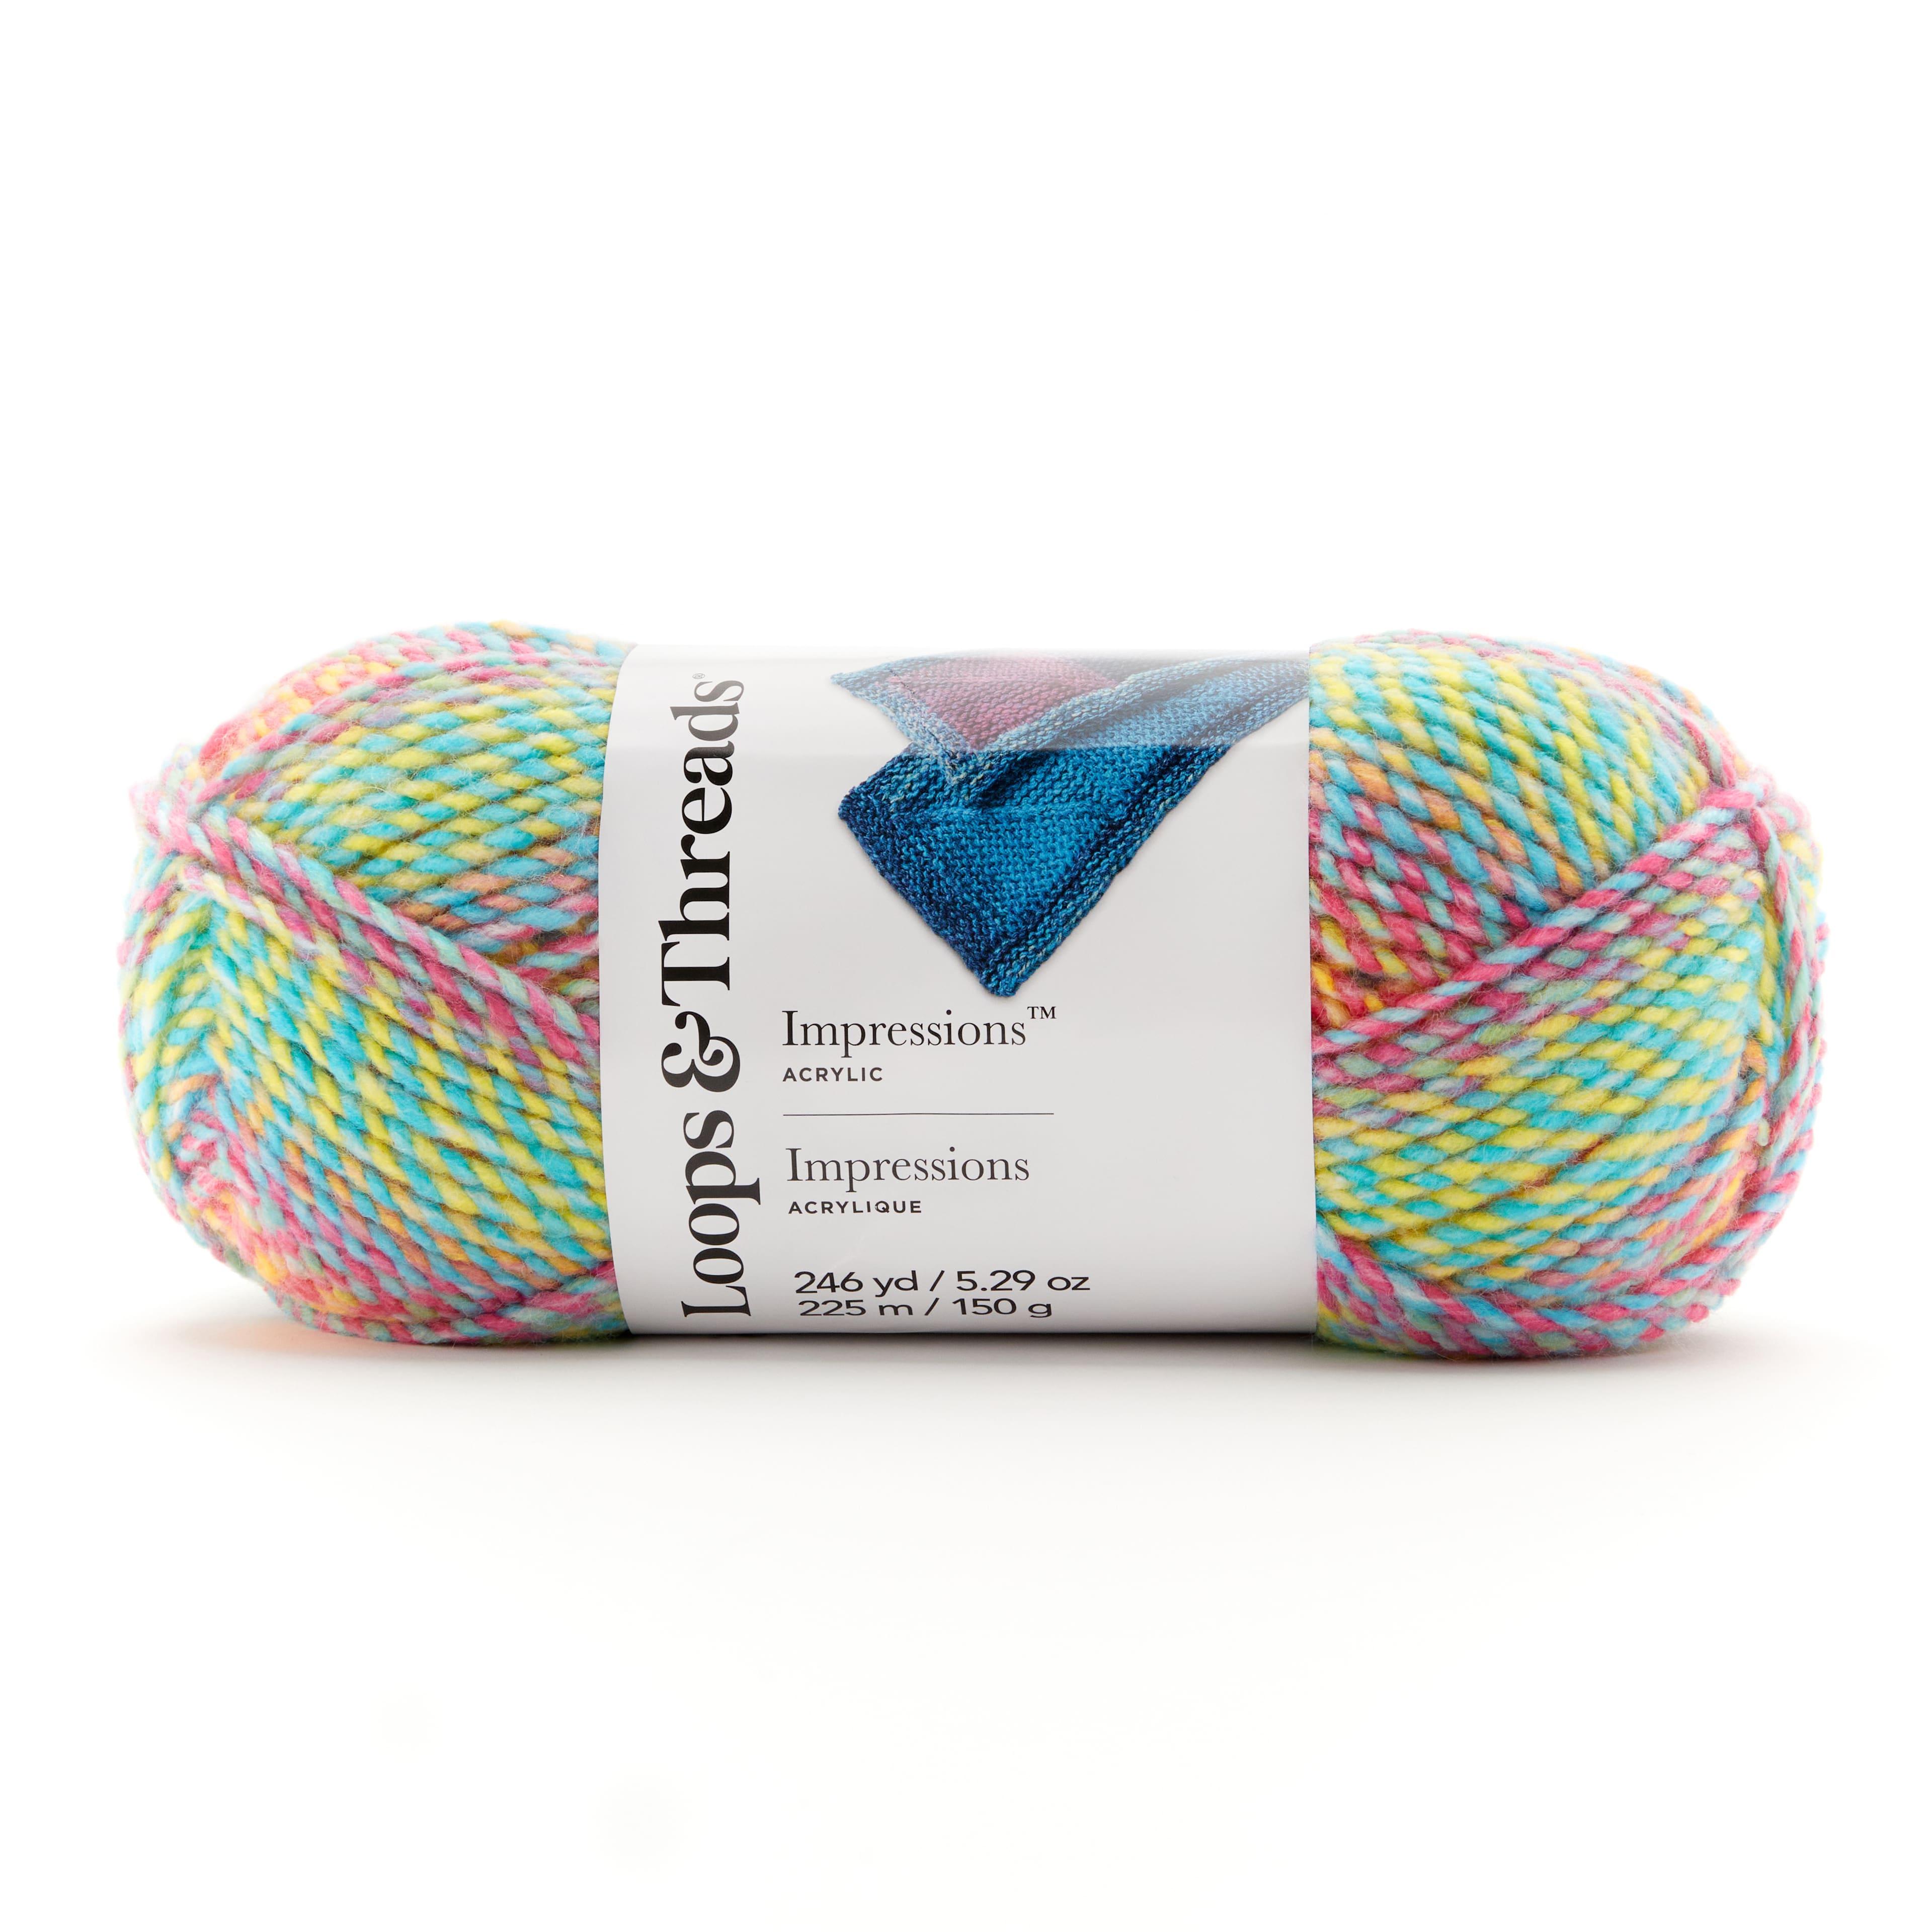 Impressions™ Yarn by Loops & Threads® | Michaels